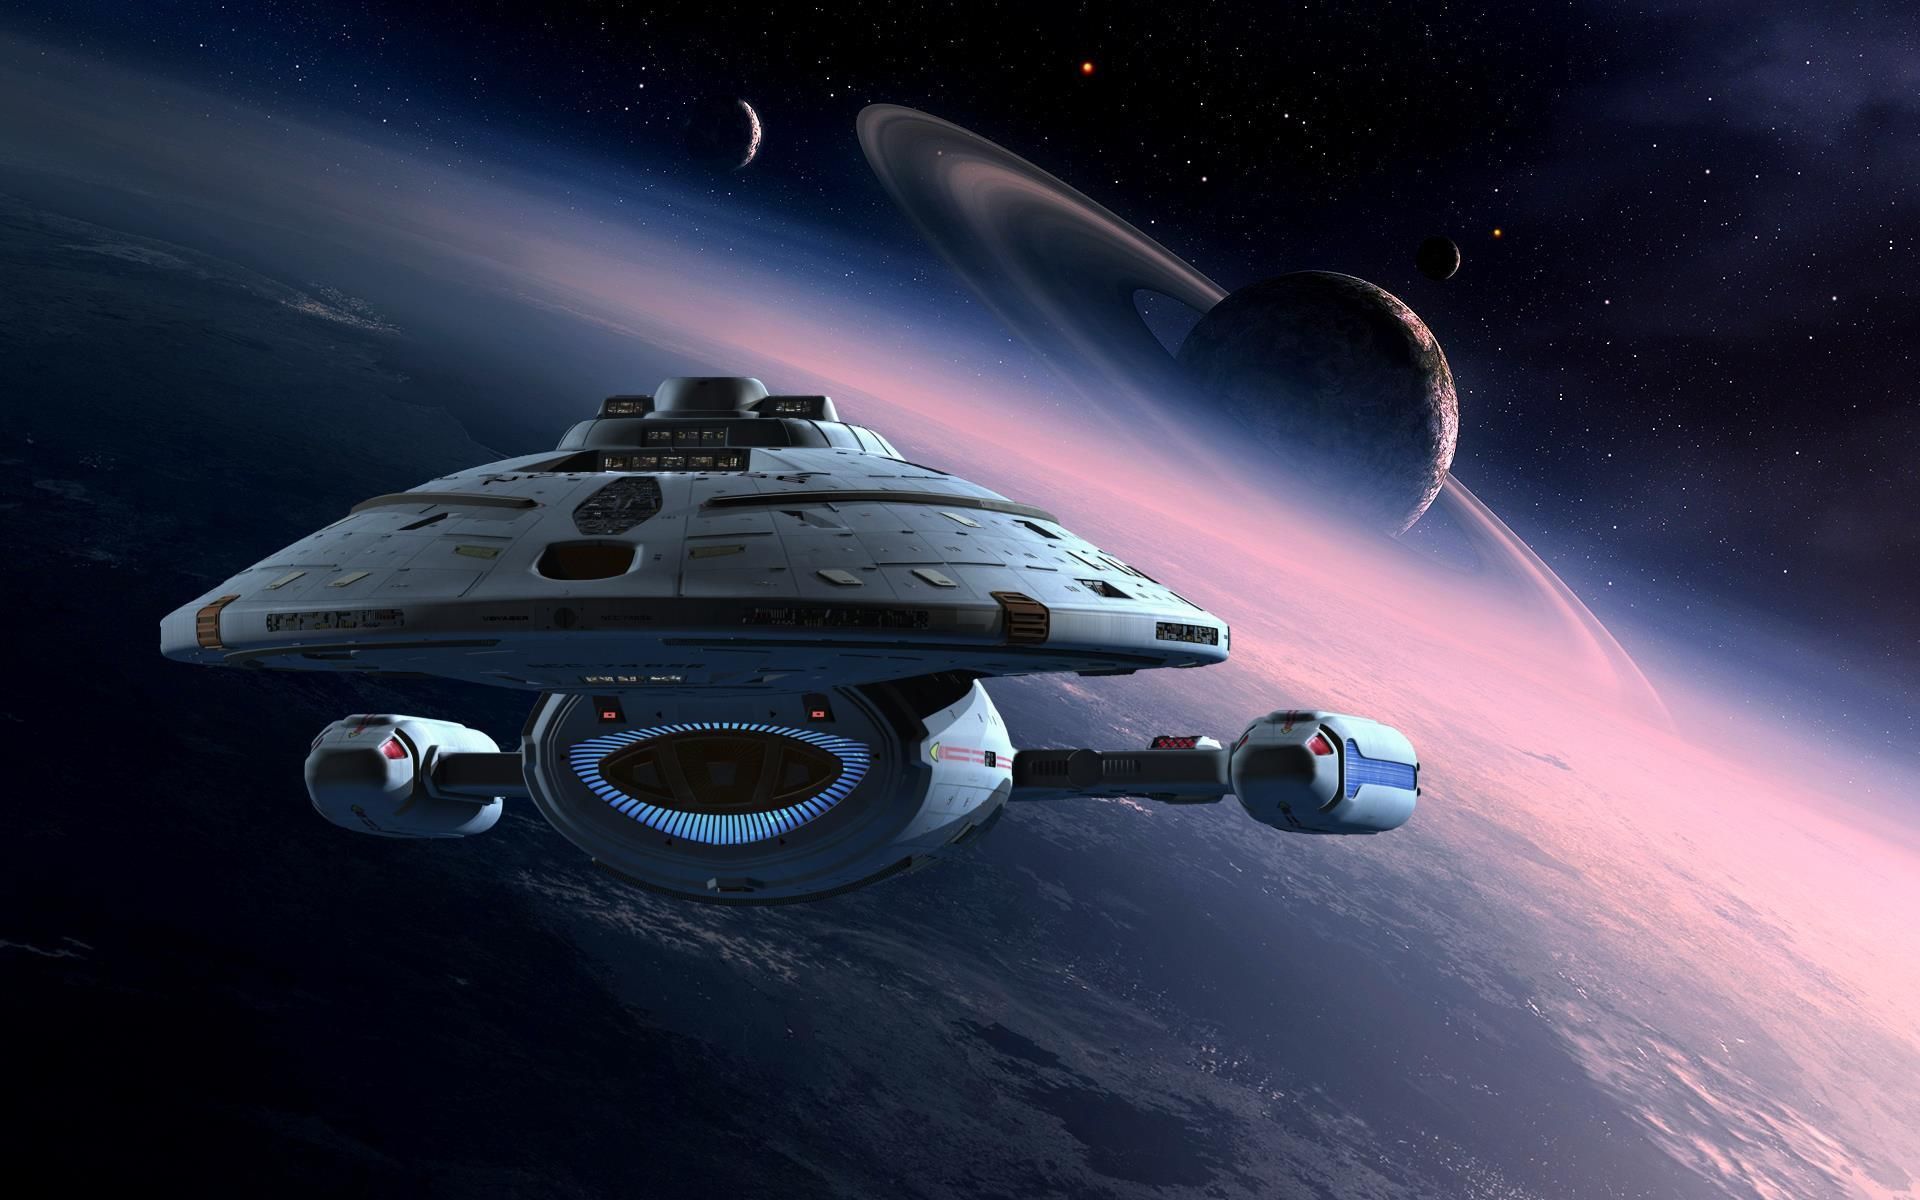 My current wallpaper [Star Trek: Voyager]. Star trek wallpaper, Star trek starships, Star trek voyager ship